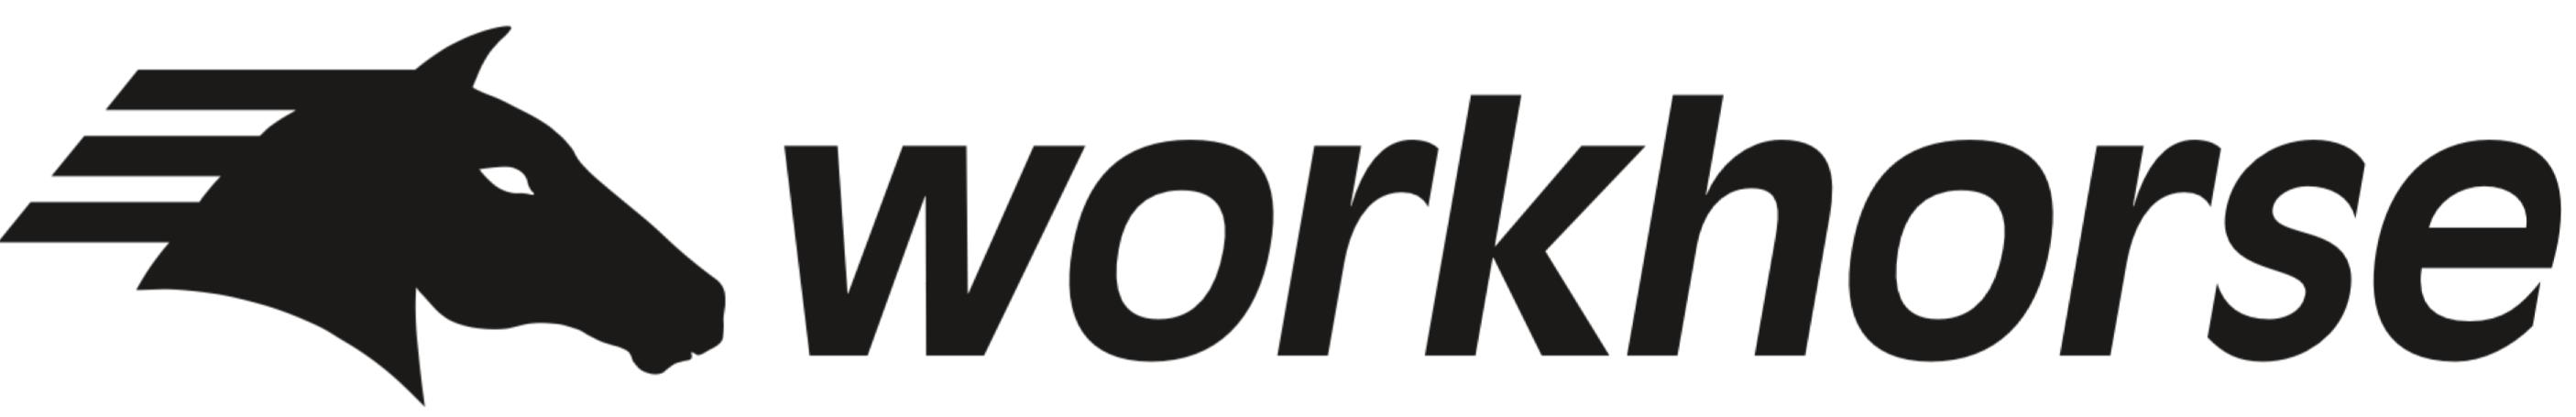 WORKHORSE - Drafthorse Solutions, Llc Trademark Registration